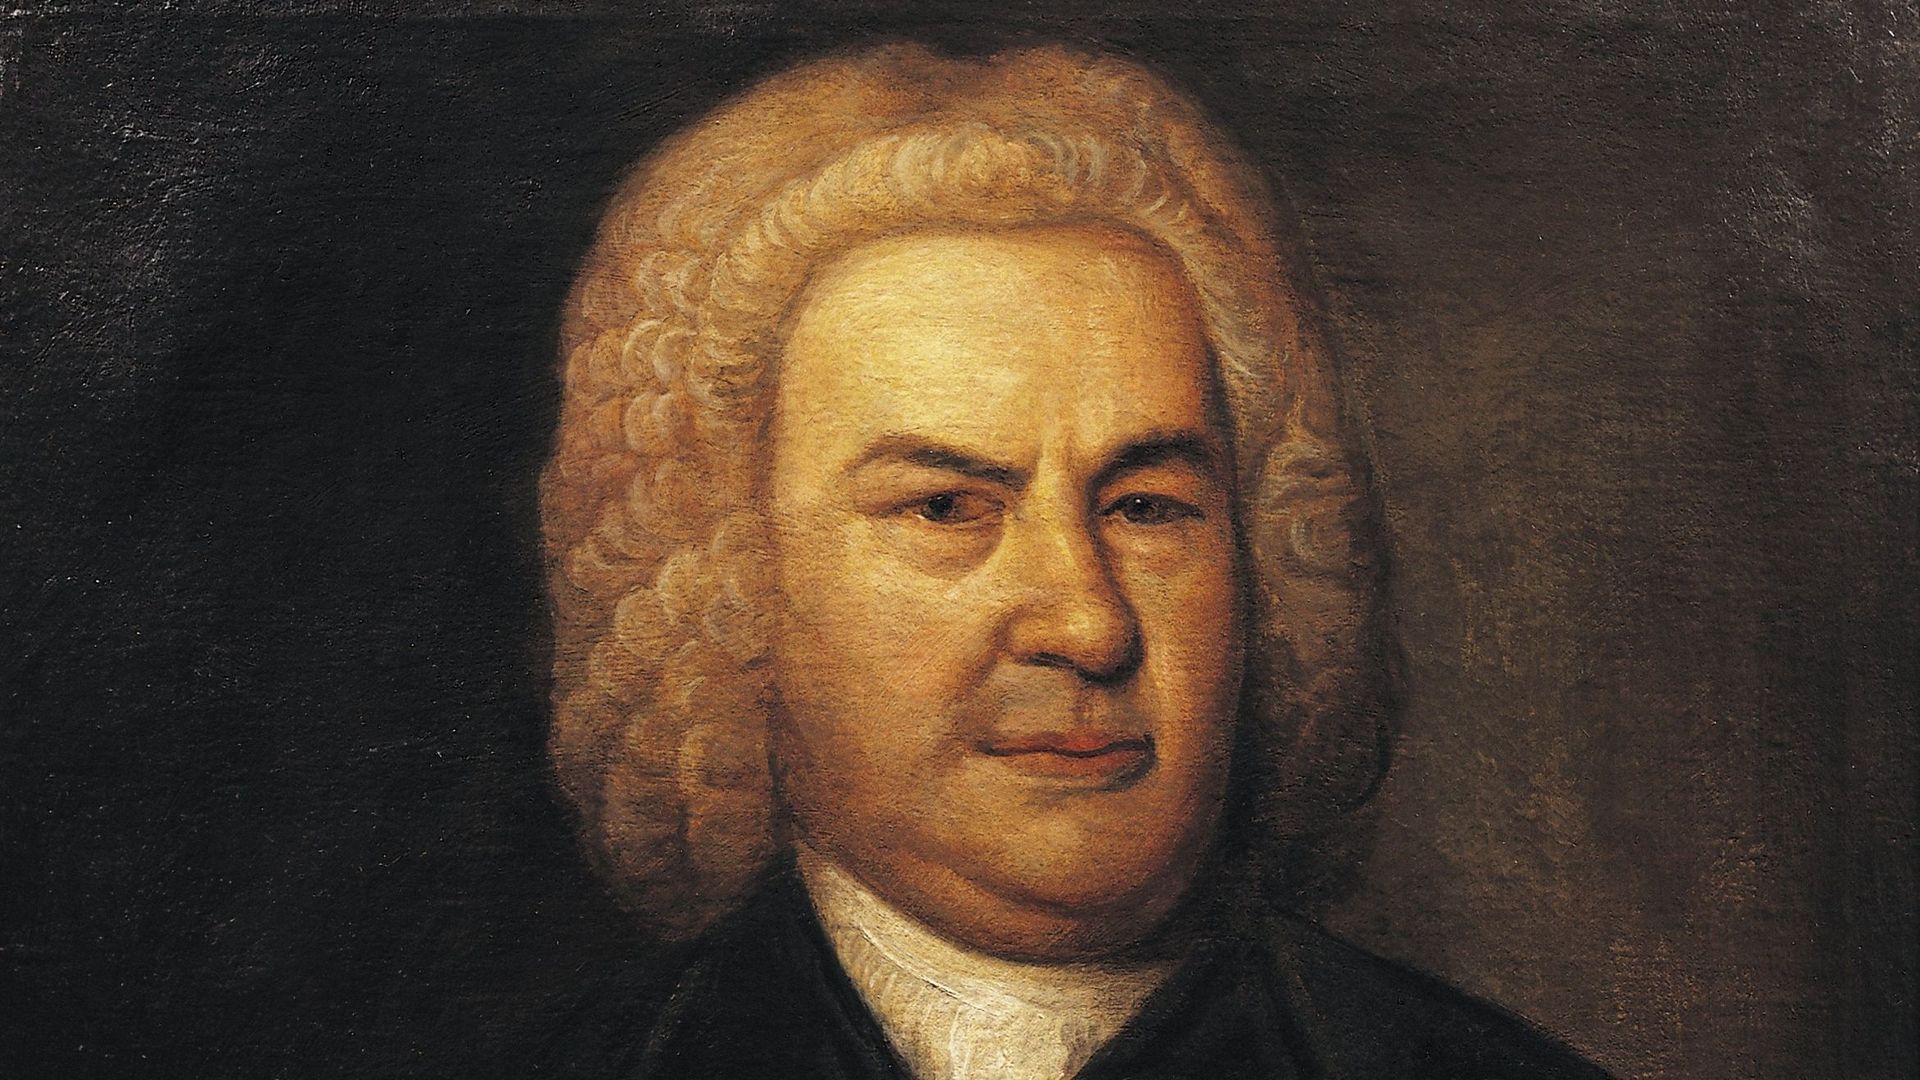 Johann Sebastian Bach (1685 - 1750).